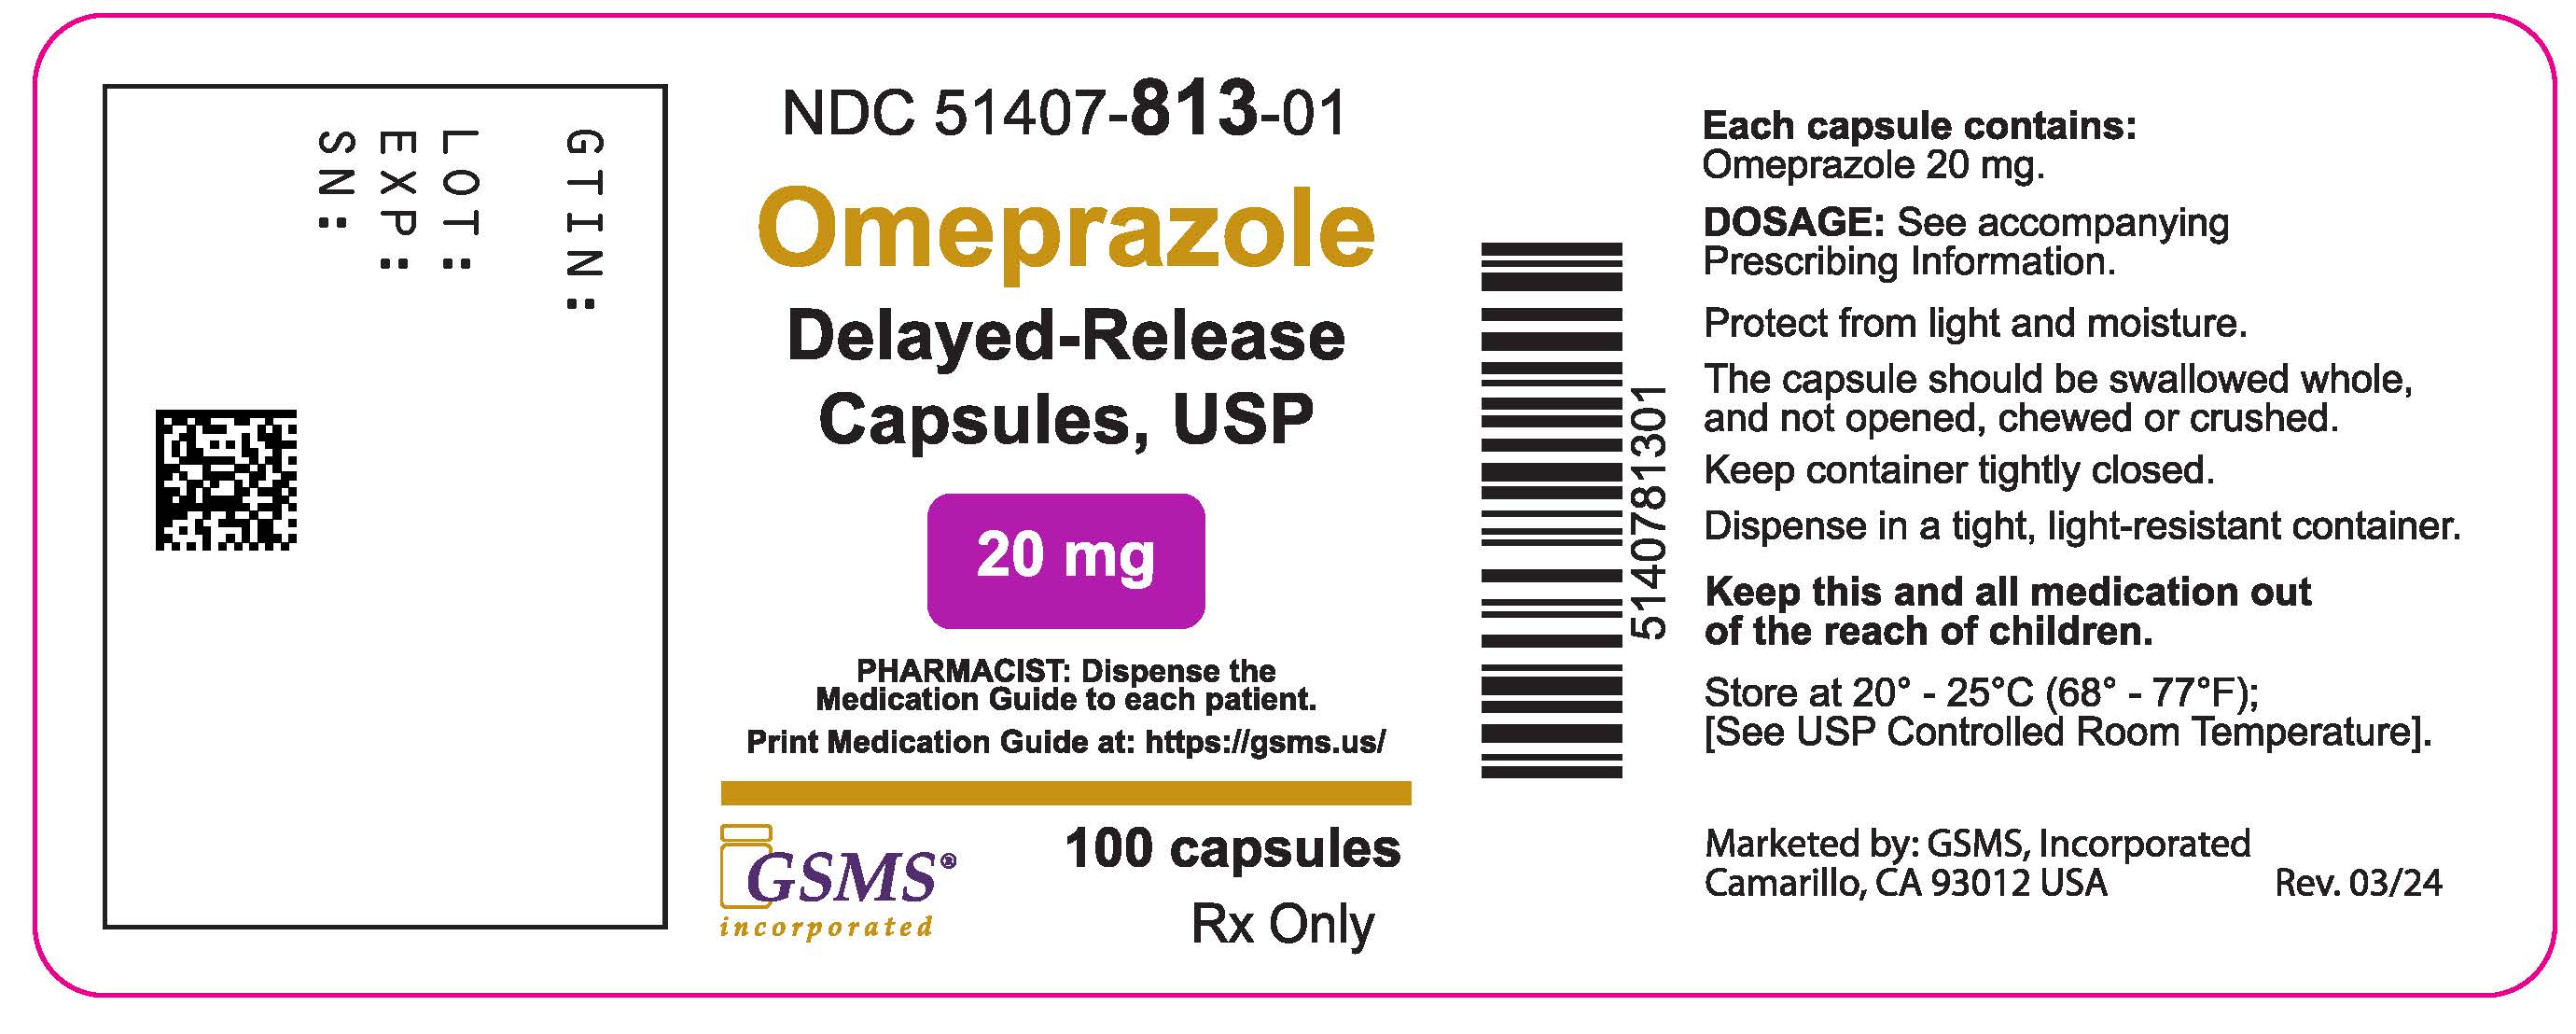 51407-813-01LB - Omeprazole 20 mg - Rev. 0324.jpg